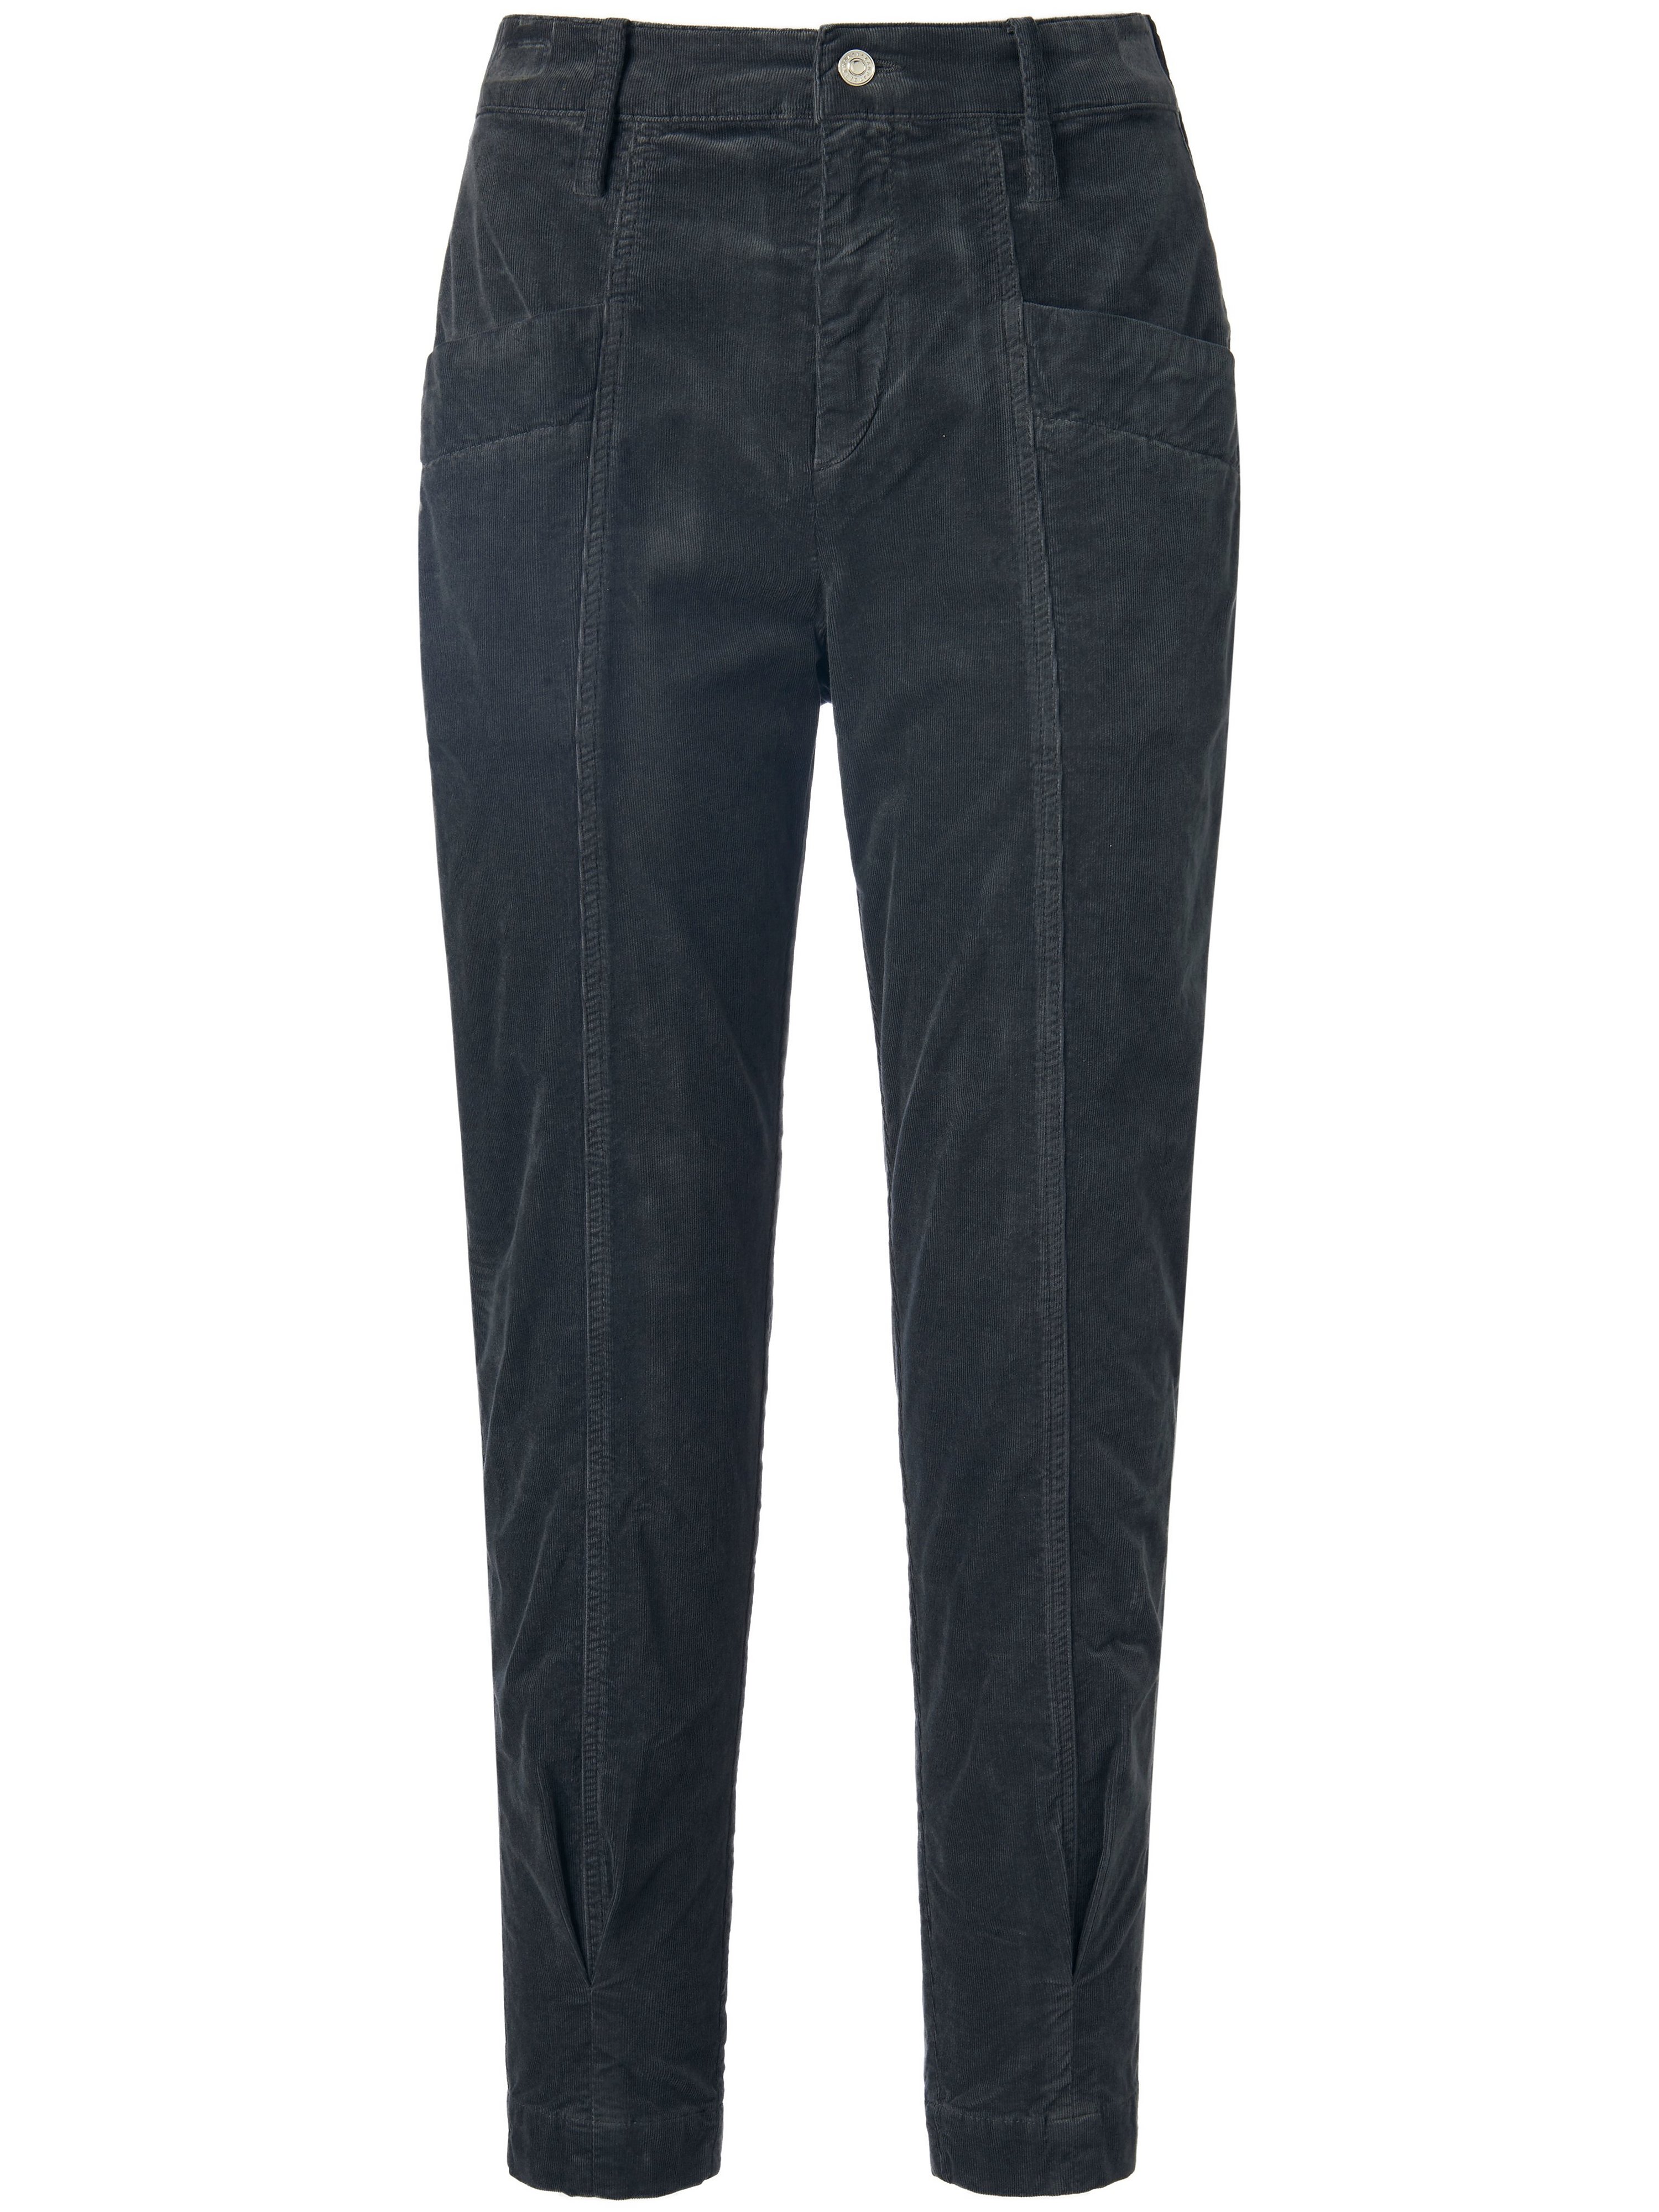 Le pantalon 7/8  MAC DAYDREAM gris